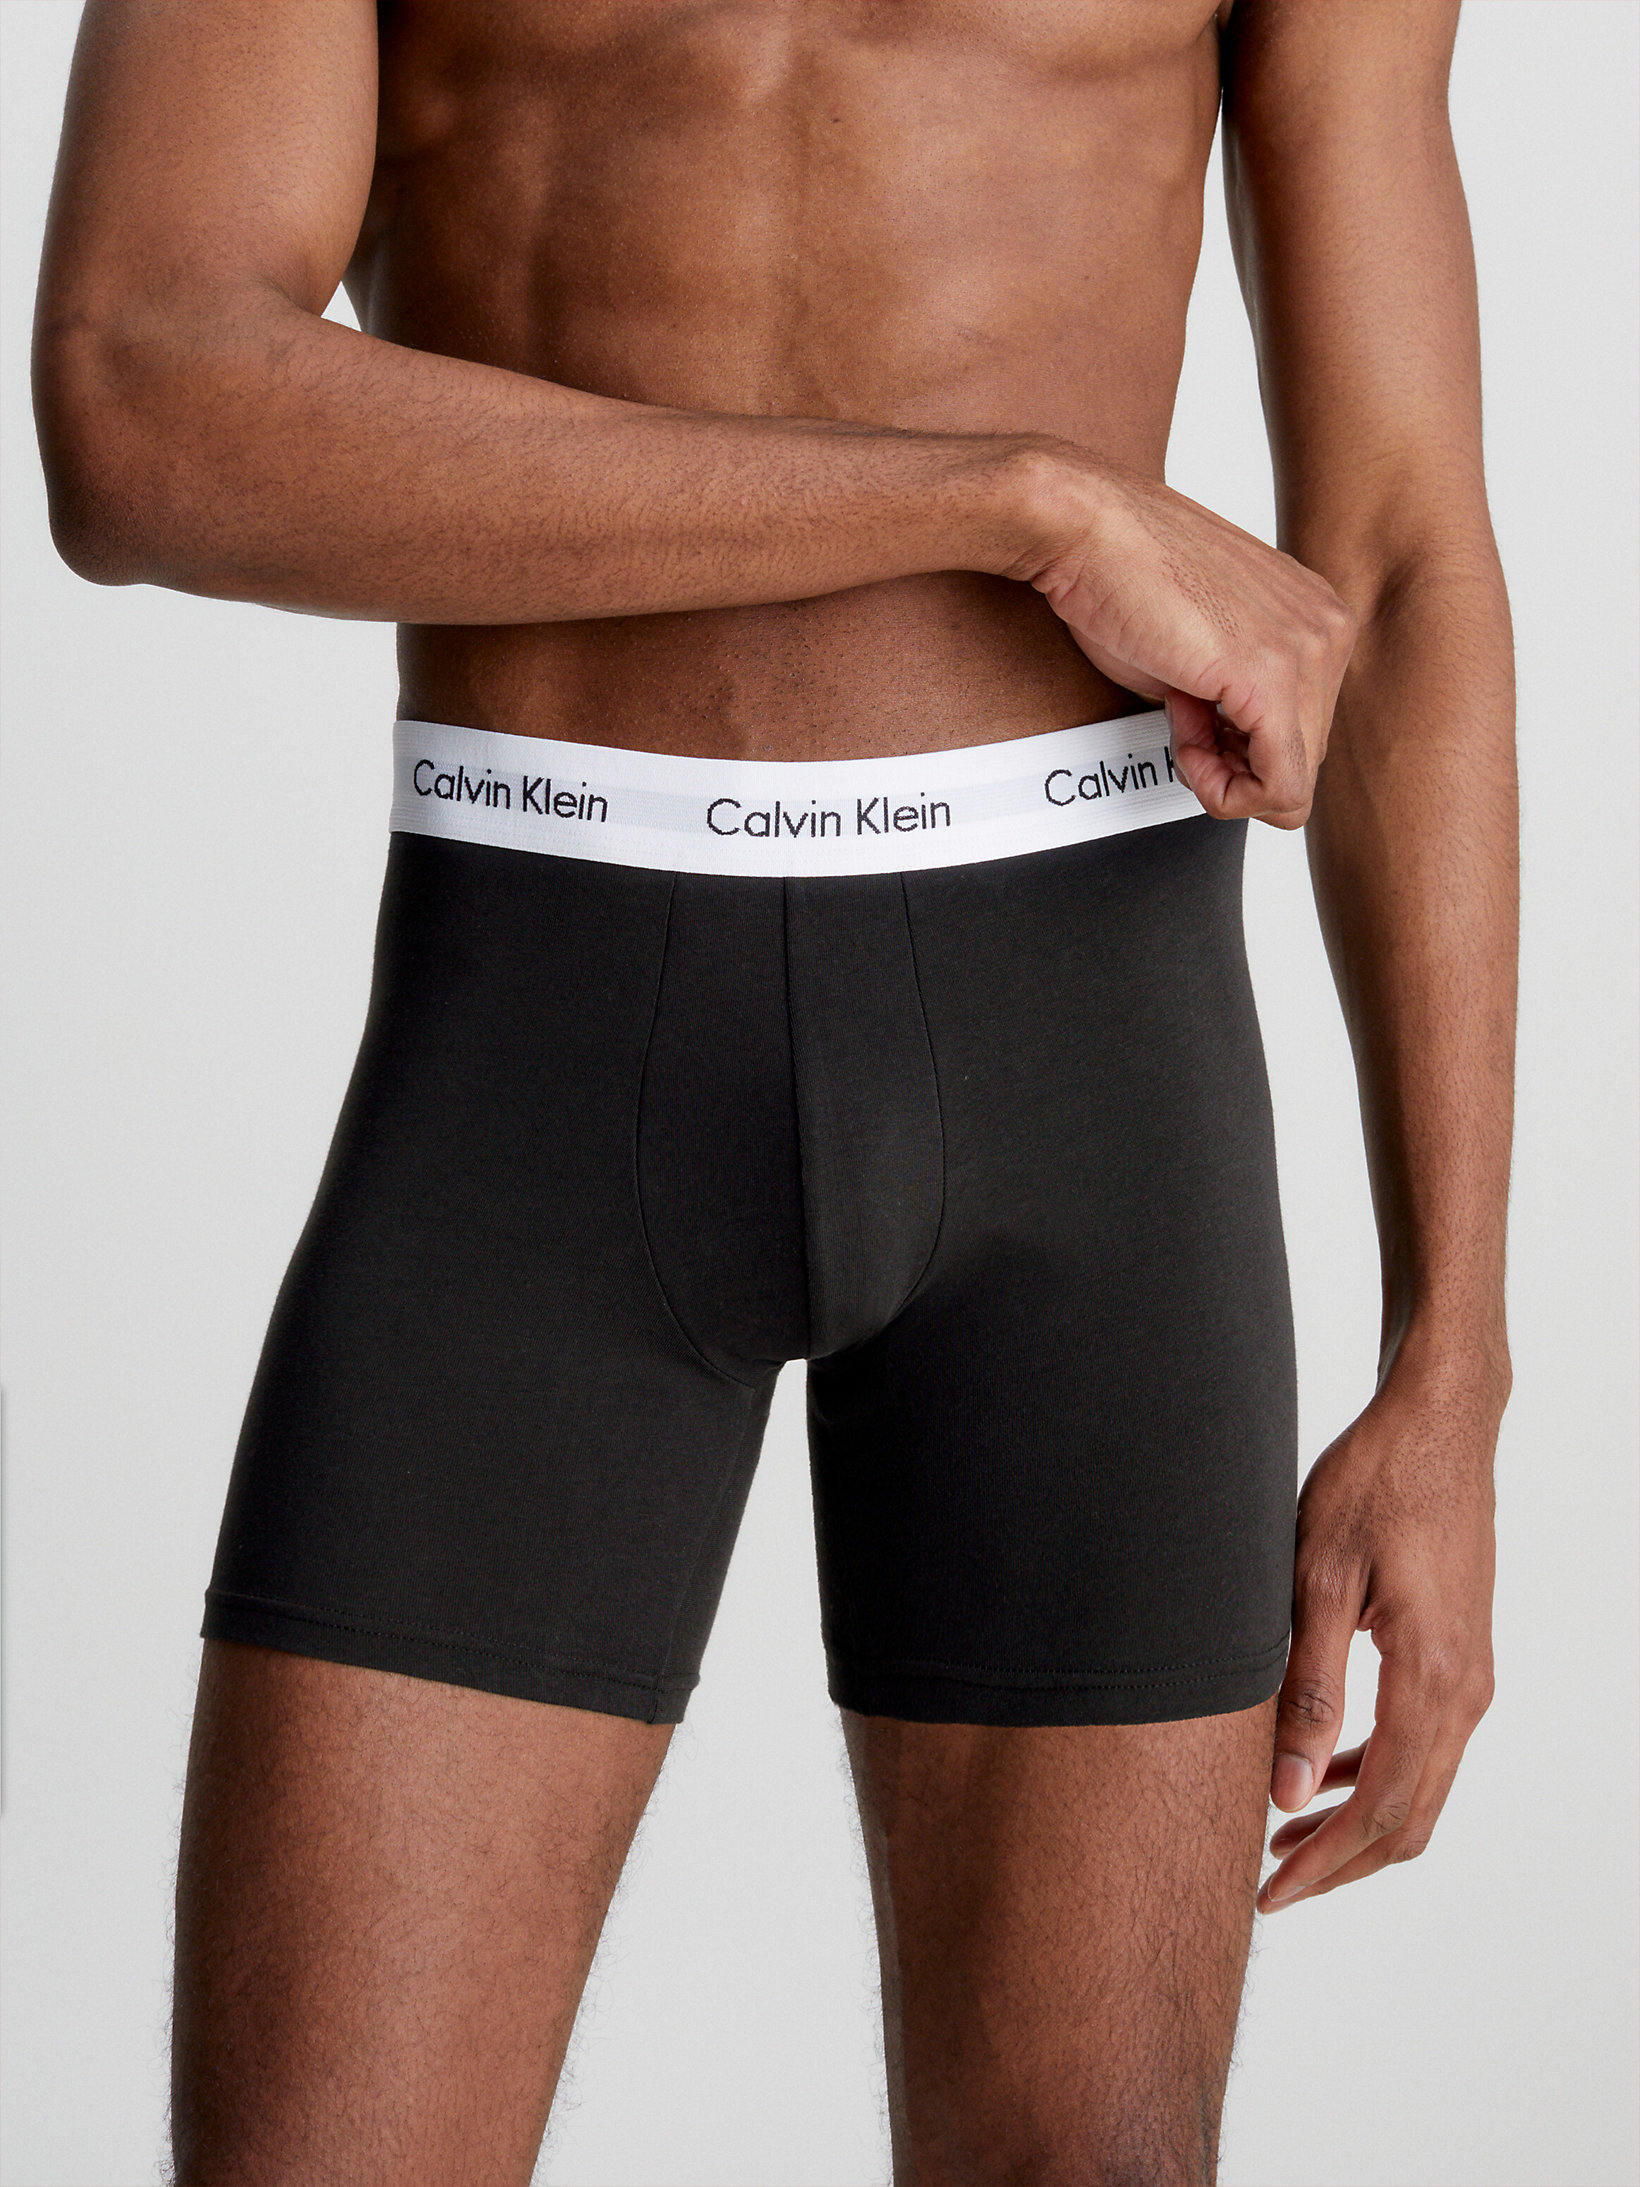 Calvin Klein Cotton Brief Pride in Black for Men Mens Clothing Underwear Boxers briefs 